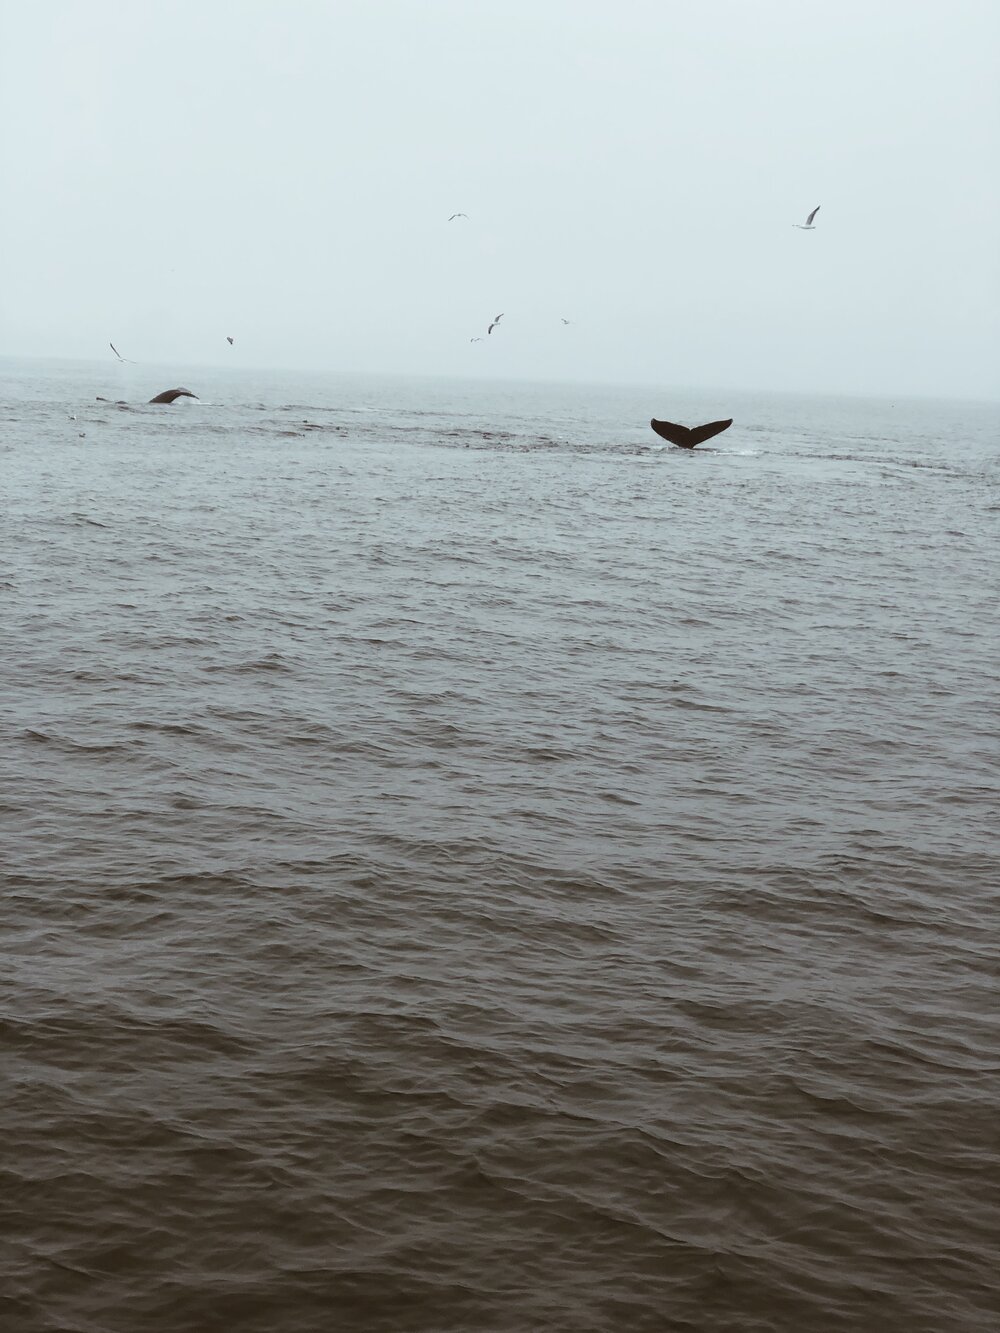 Humpback whales of Monterey, California